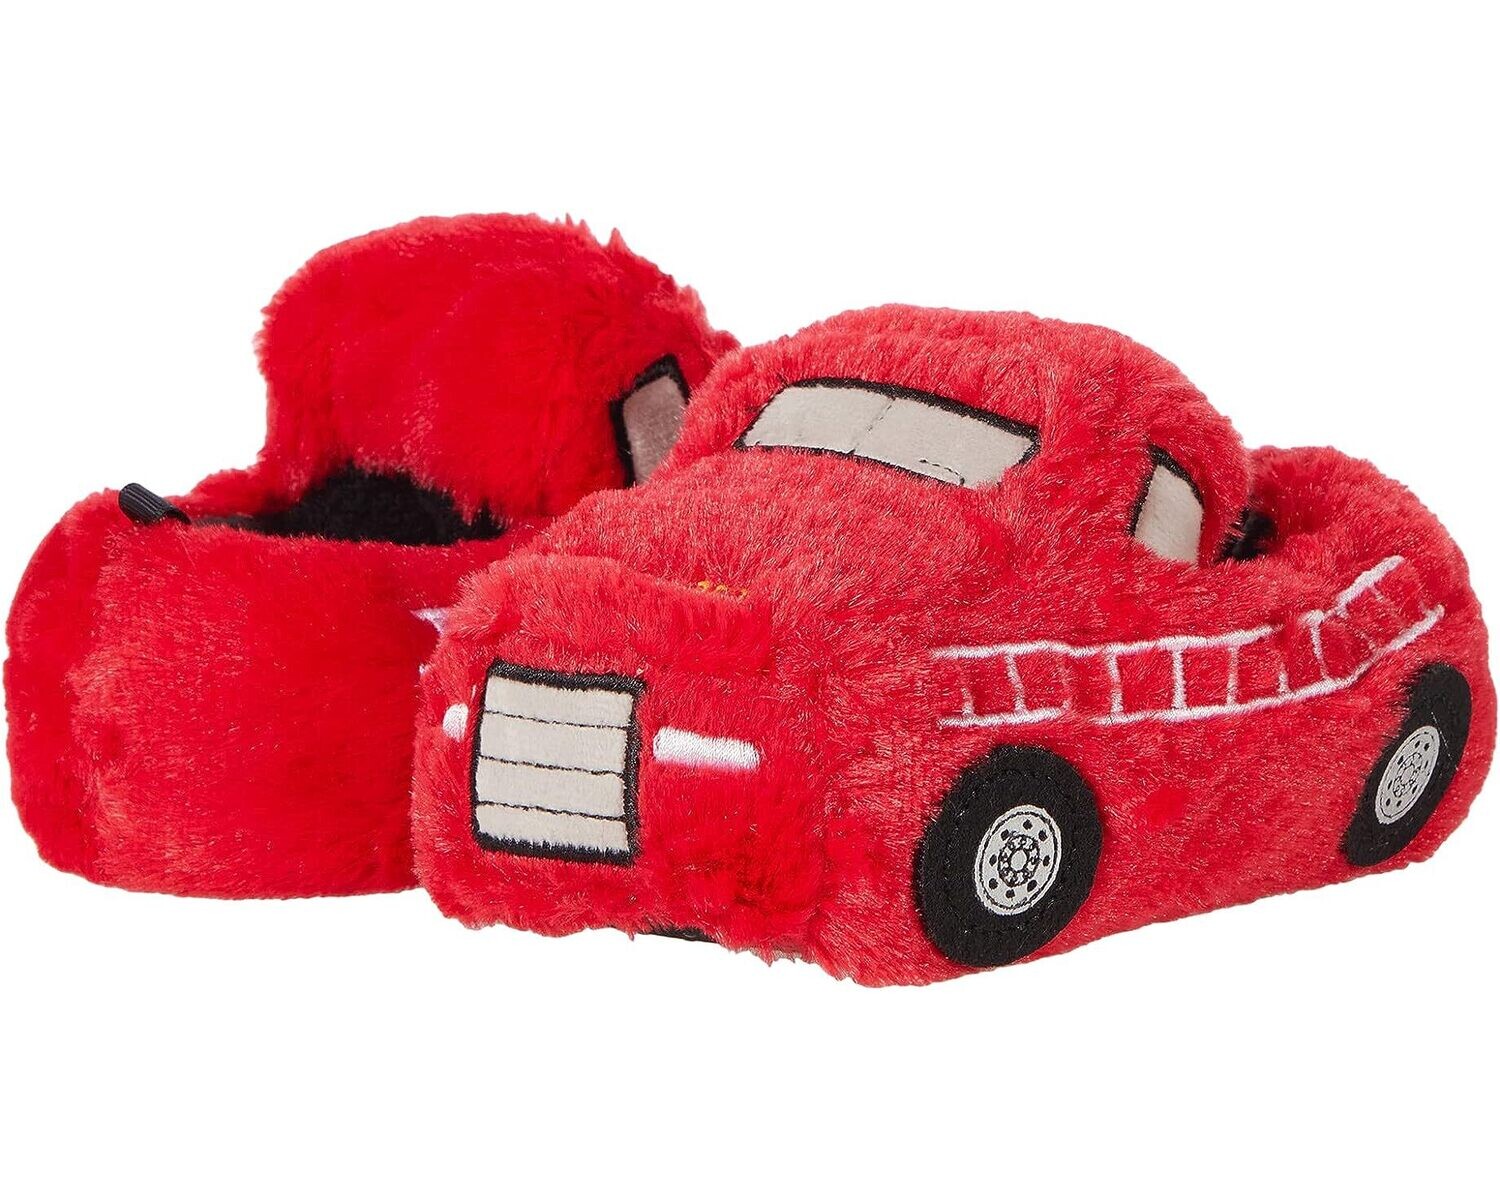 Original Carter's Toddler Car Slippers